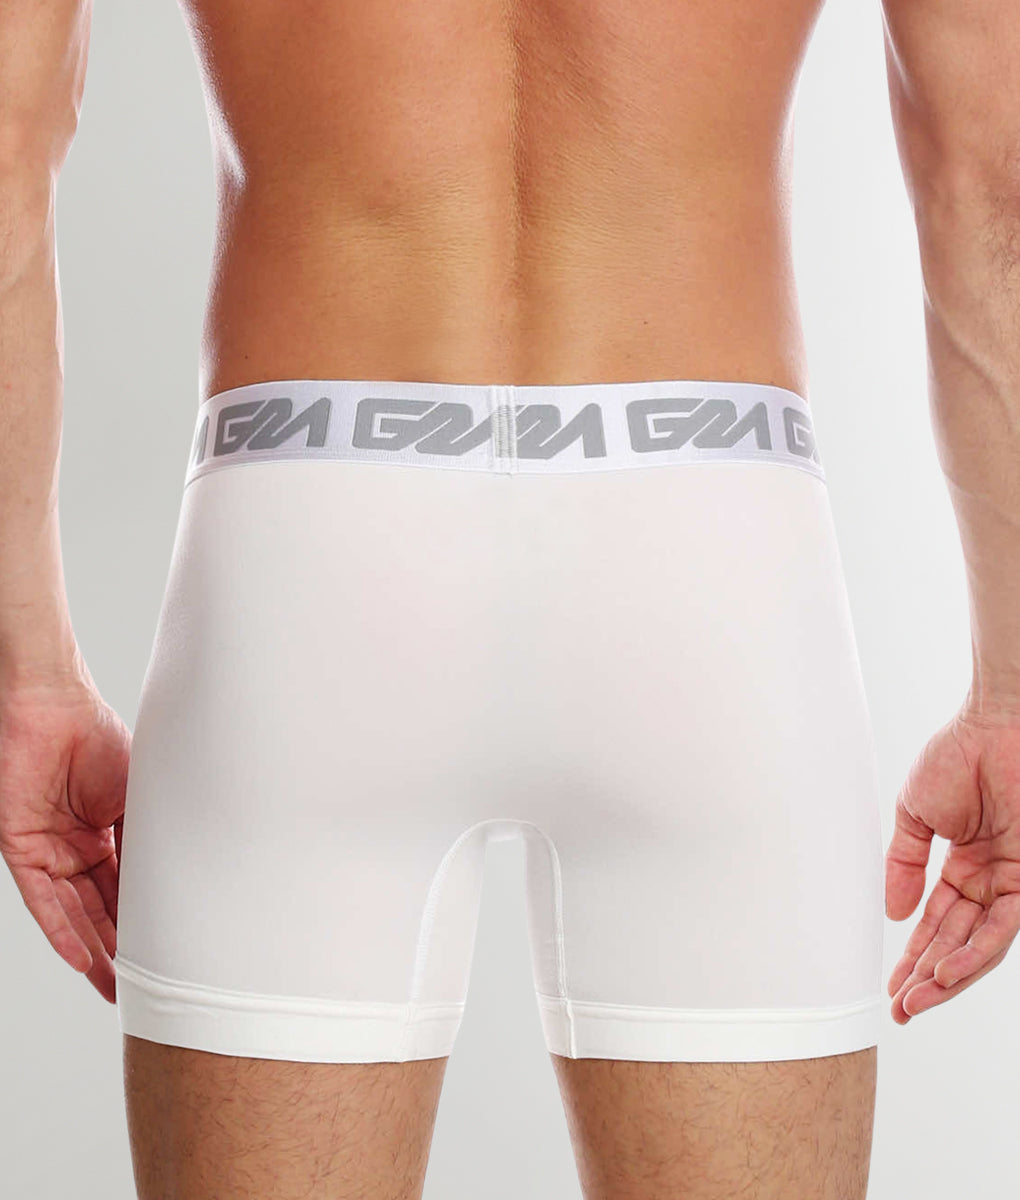 The Rise of Gay Underwear! – GARÇON